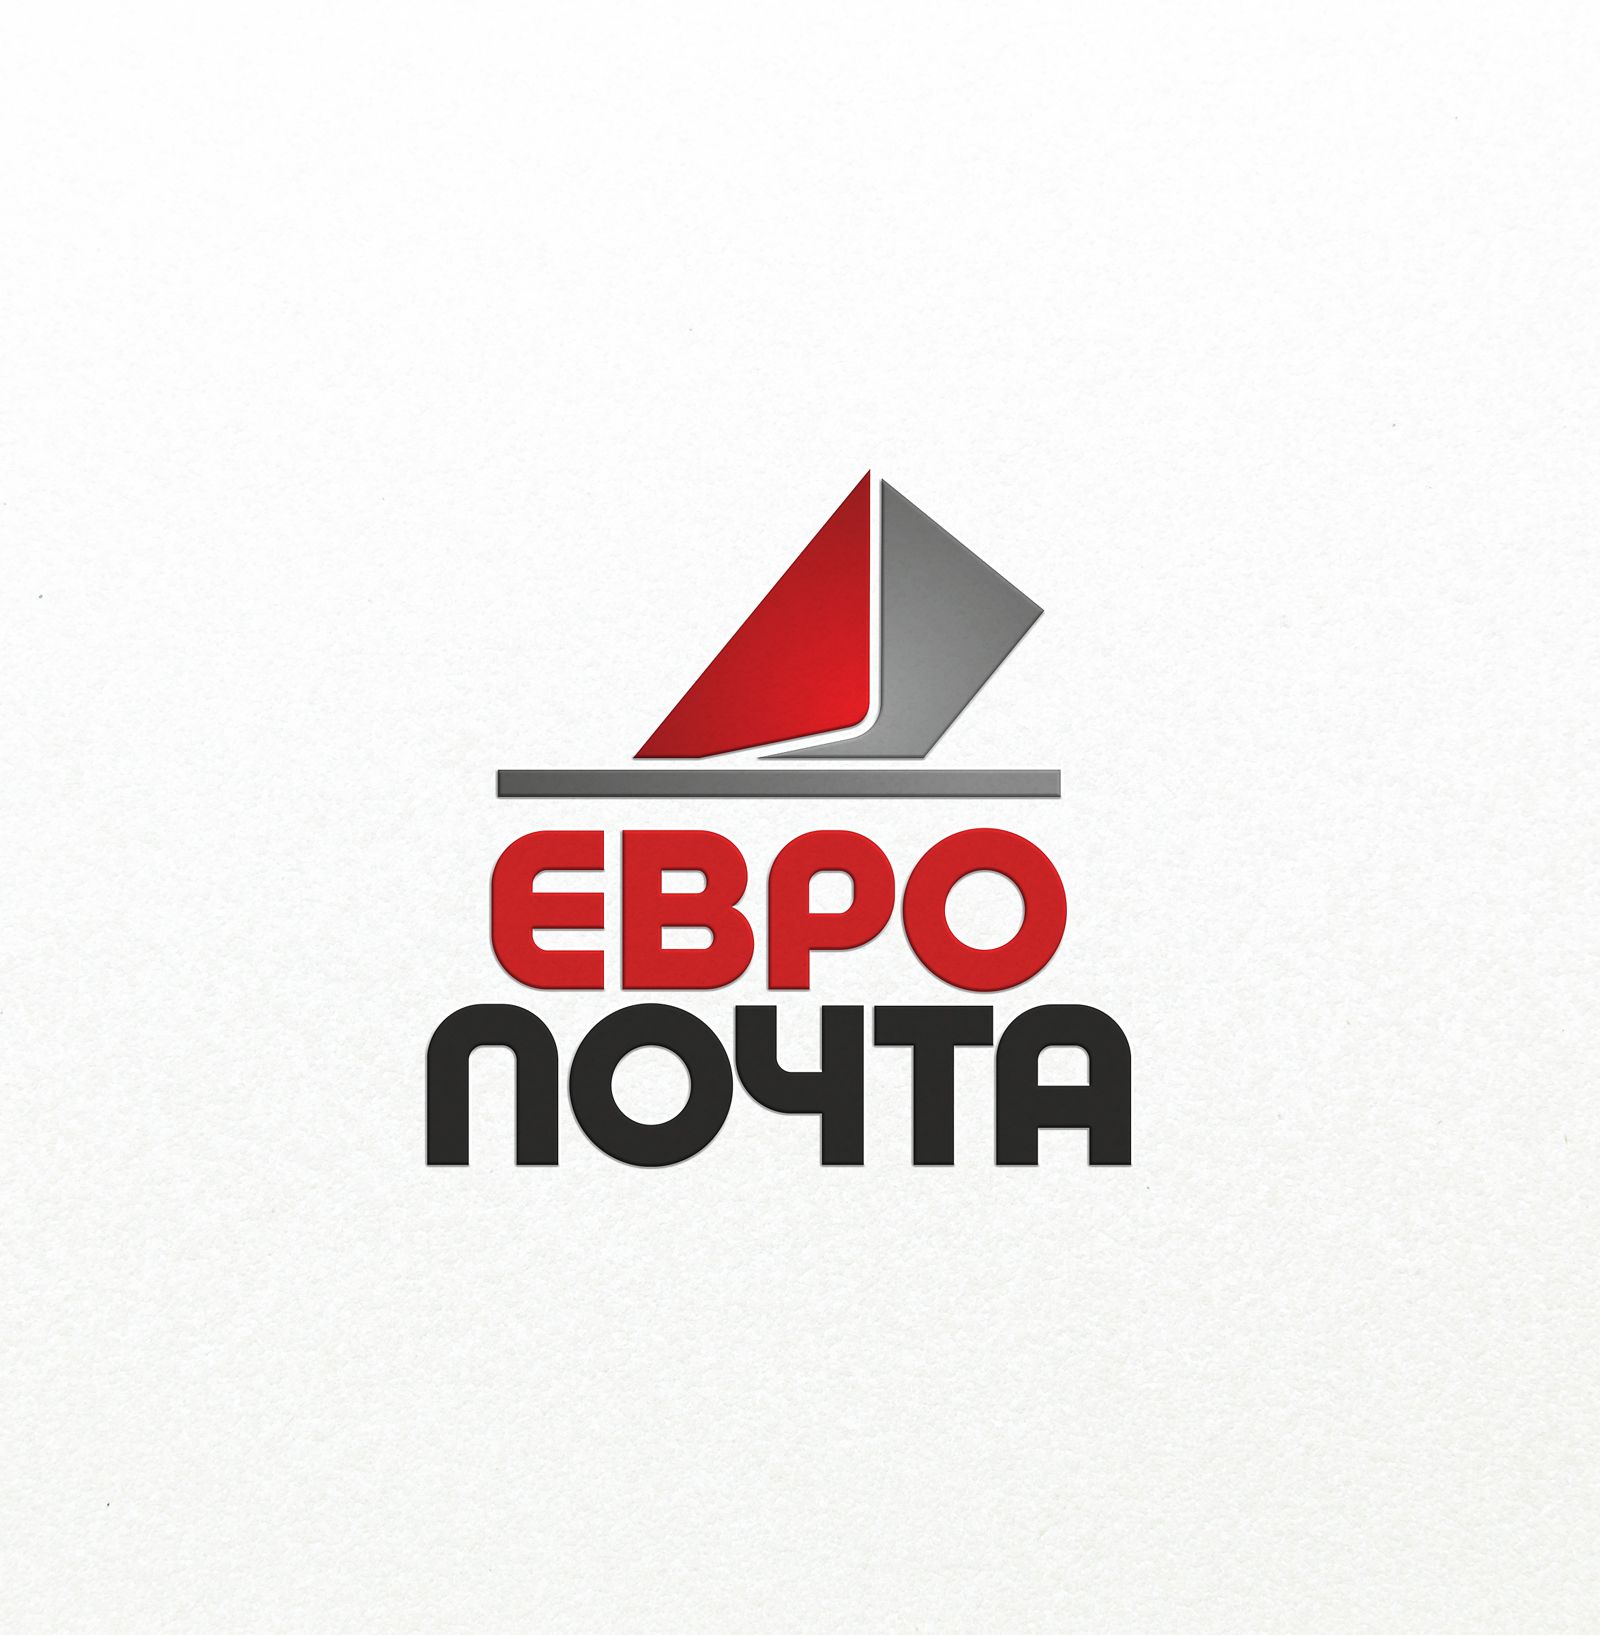 Логотип для ЕвроПочта - дизайнер ilim1973